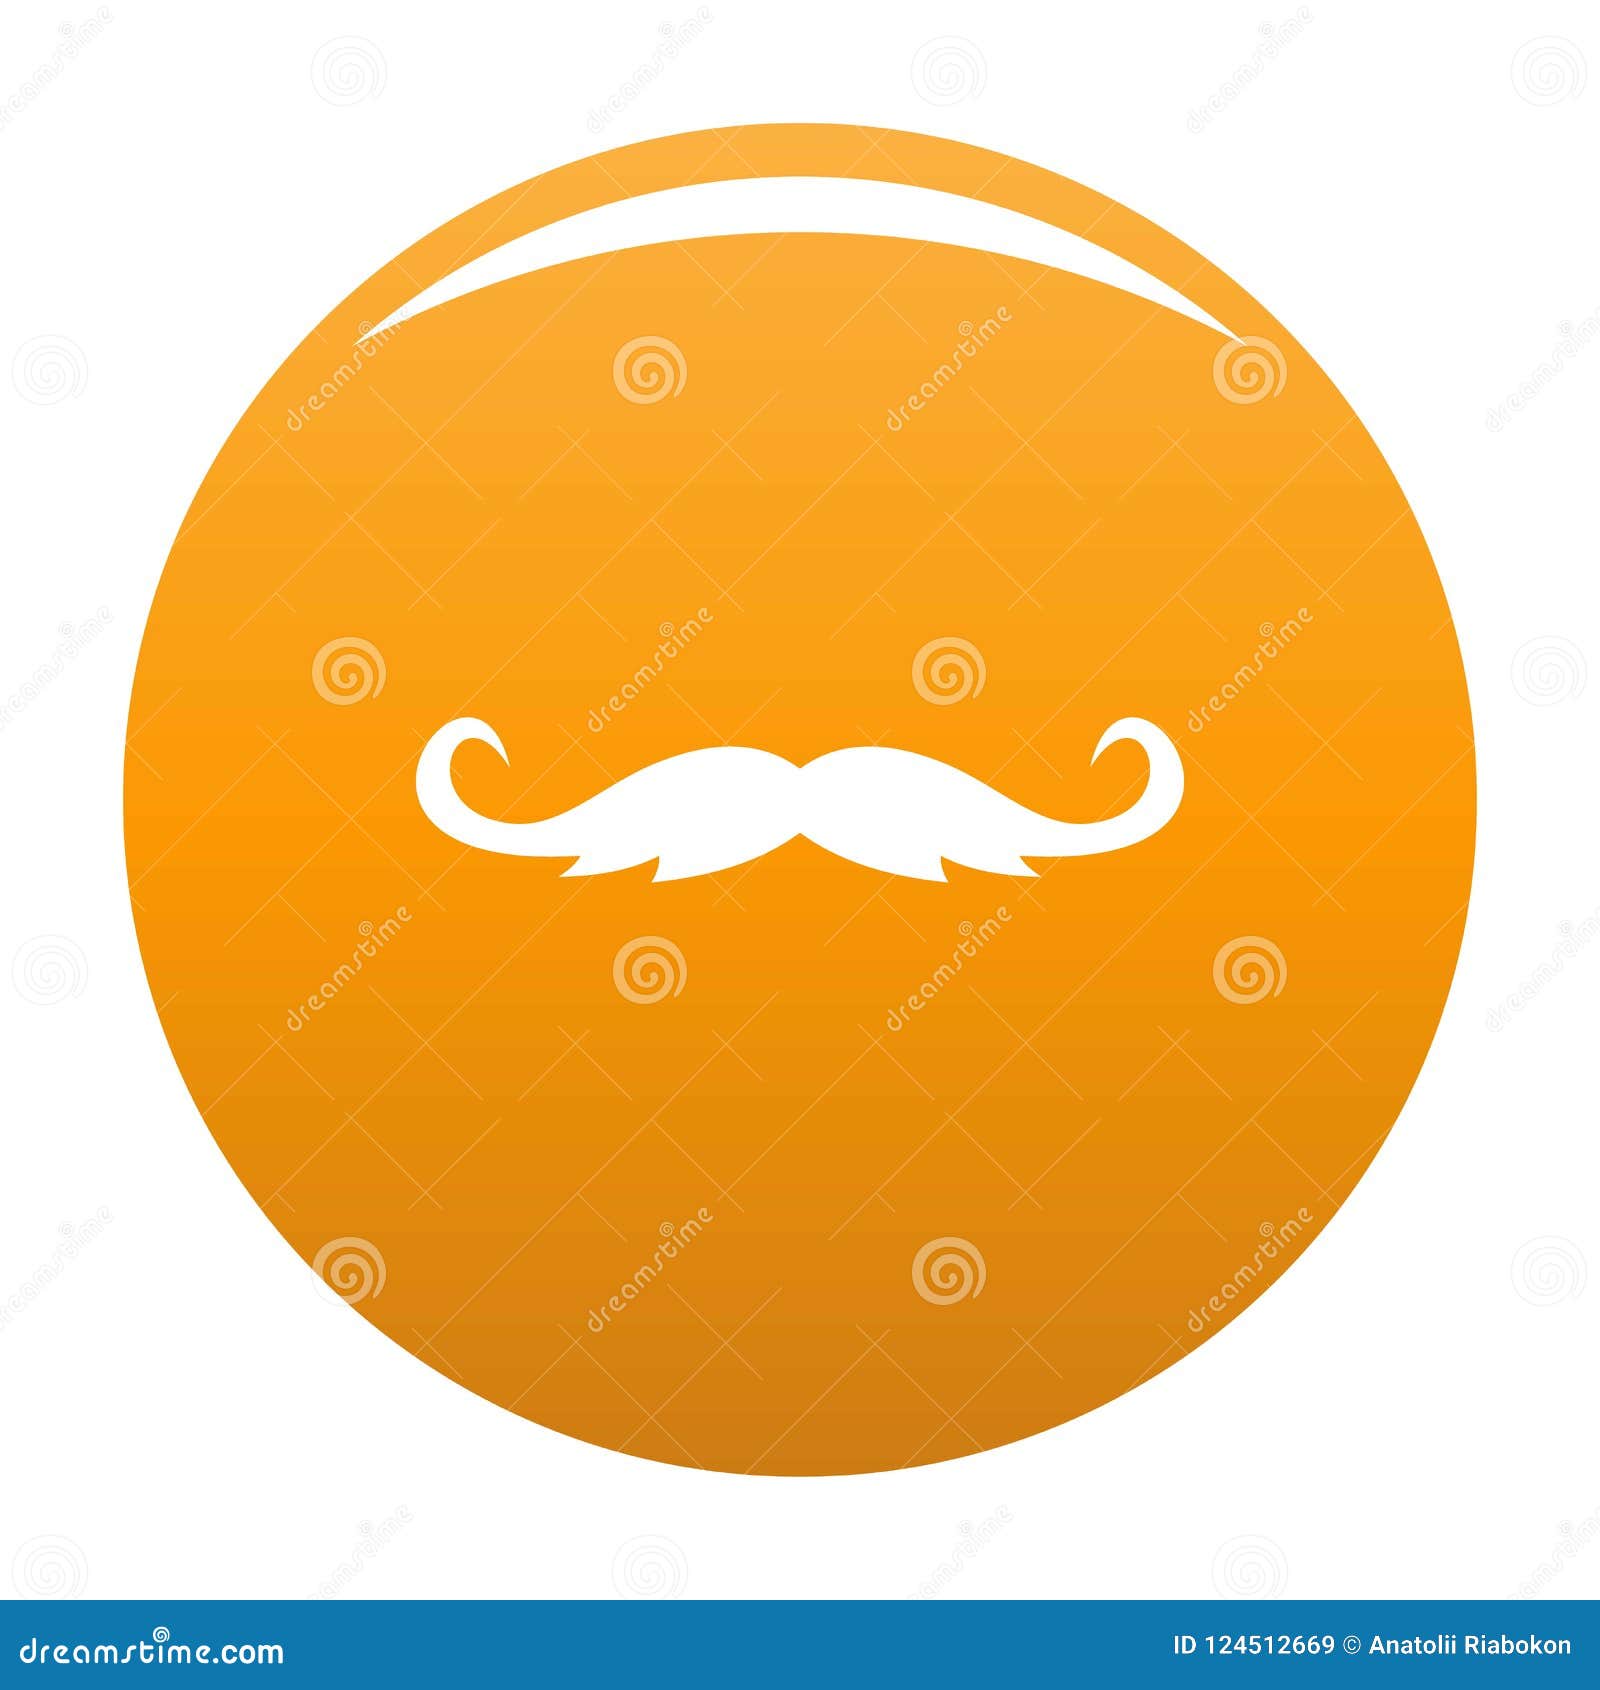 Curly mustache icon orange stock illustration. Illustration of male ...